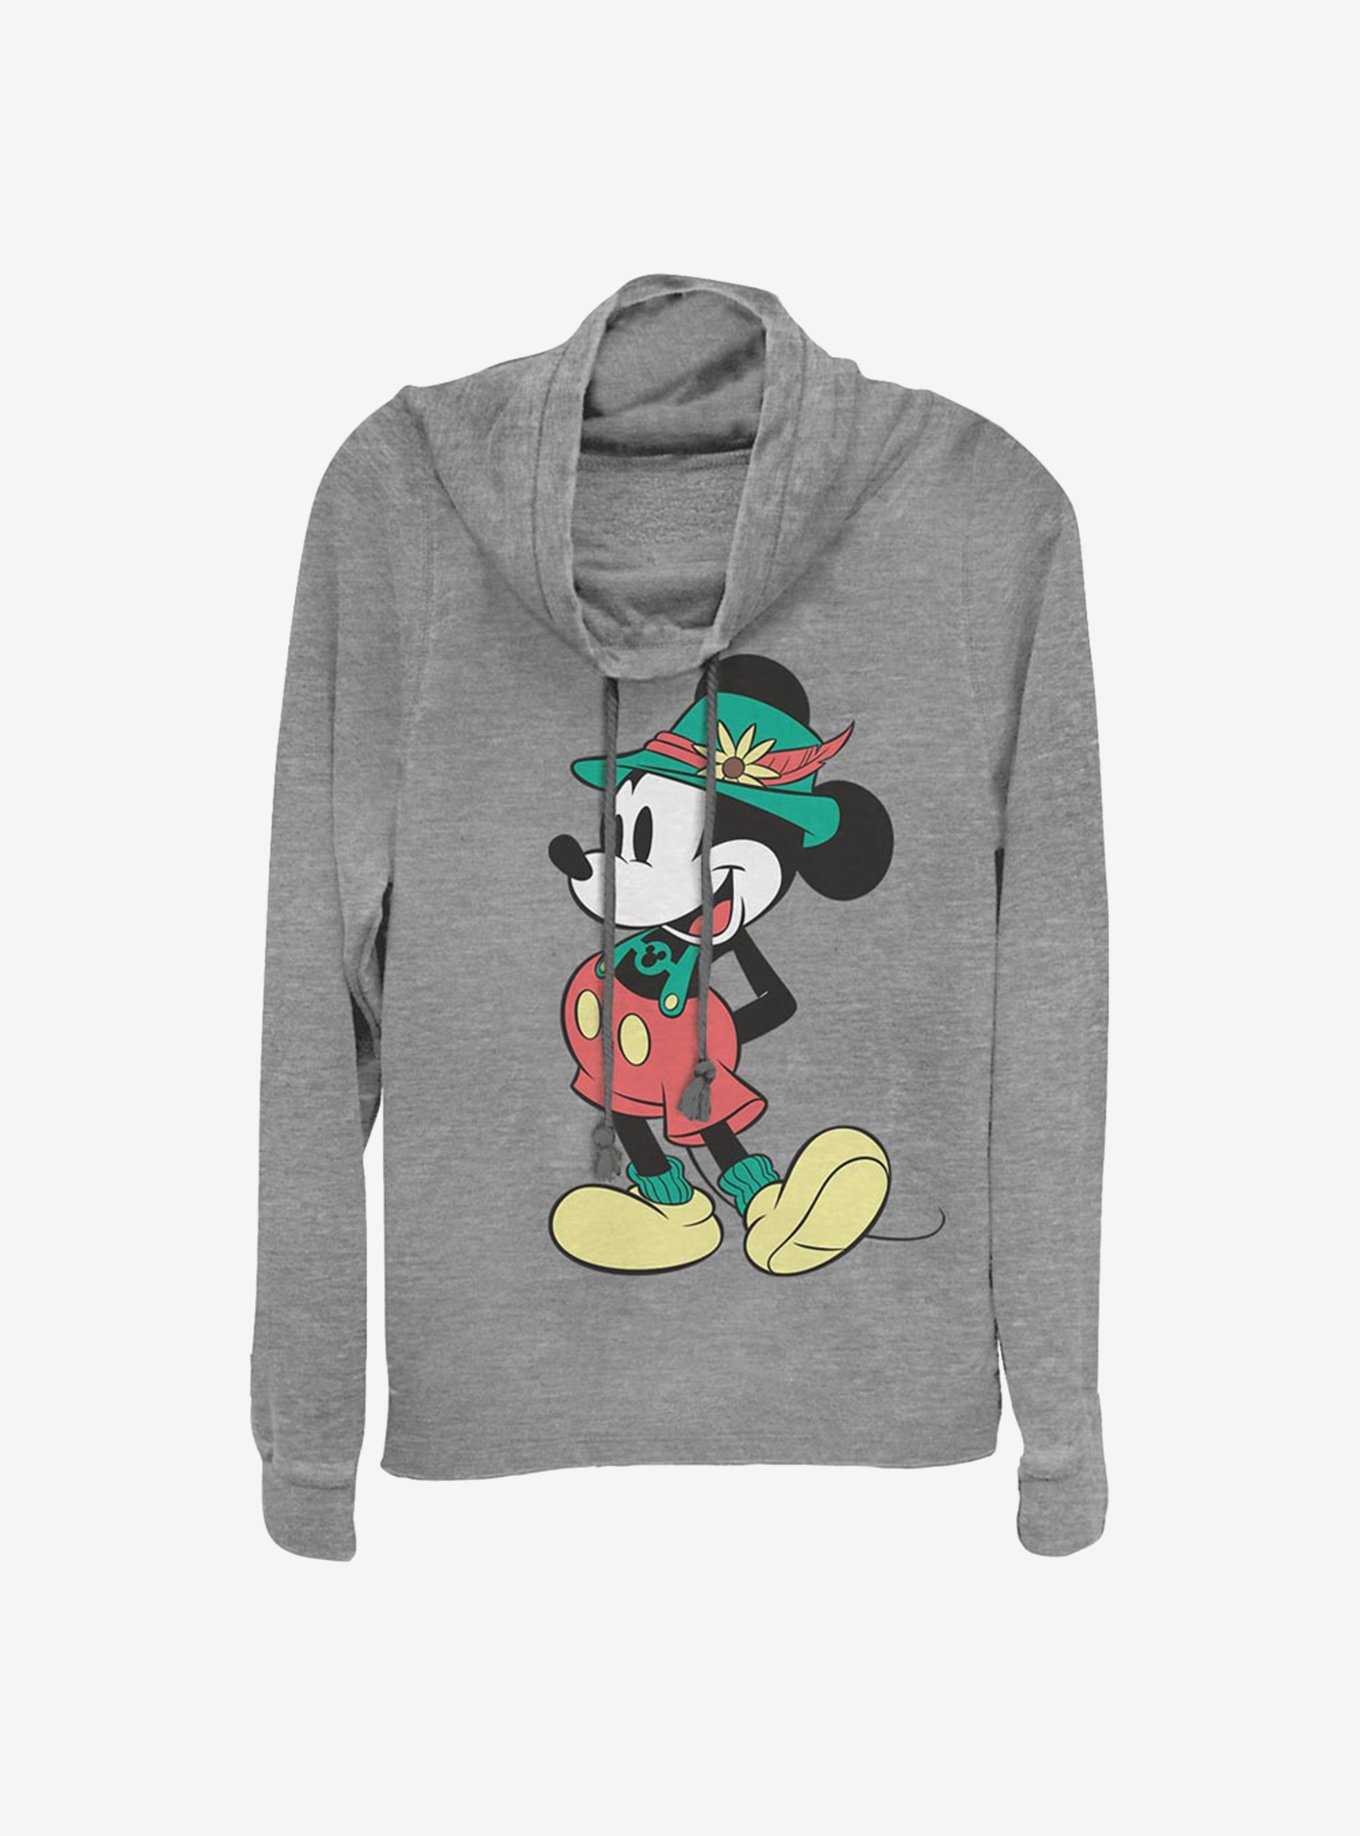 Disney Mickey Mouse Lederhosen Cowlneck Long-Sleeve Girls Top, , hi-res